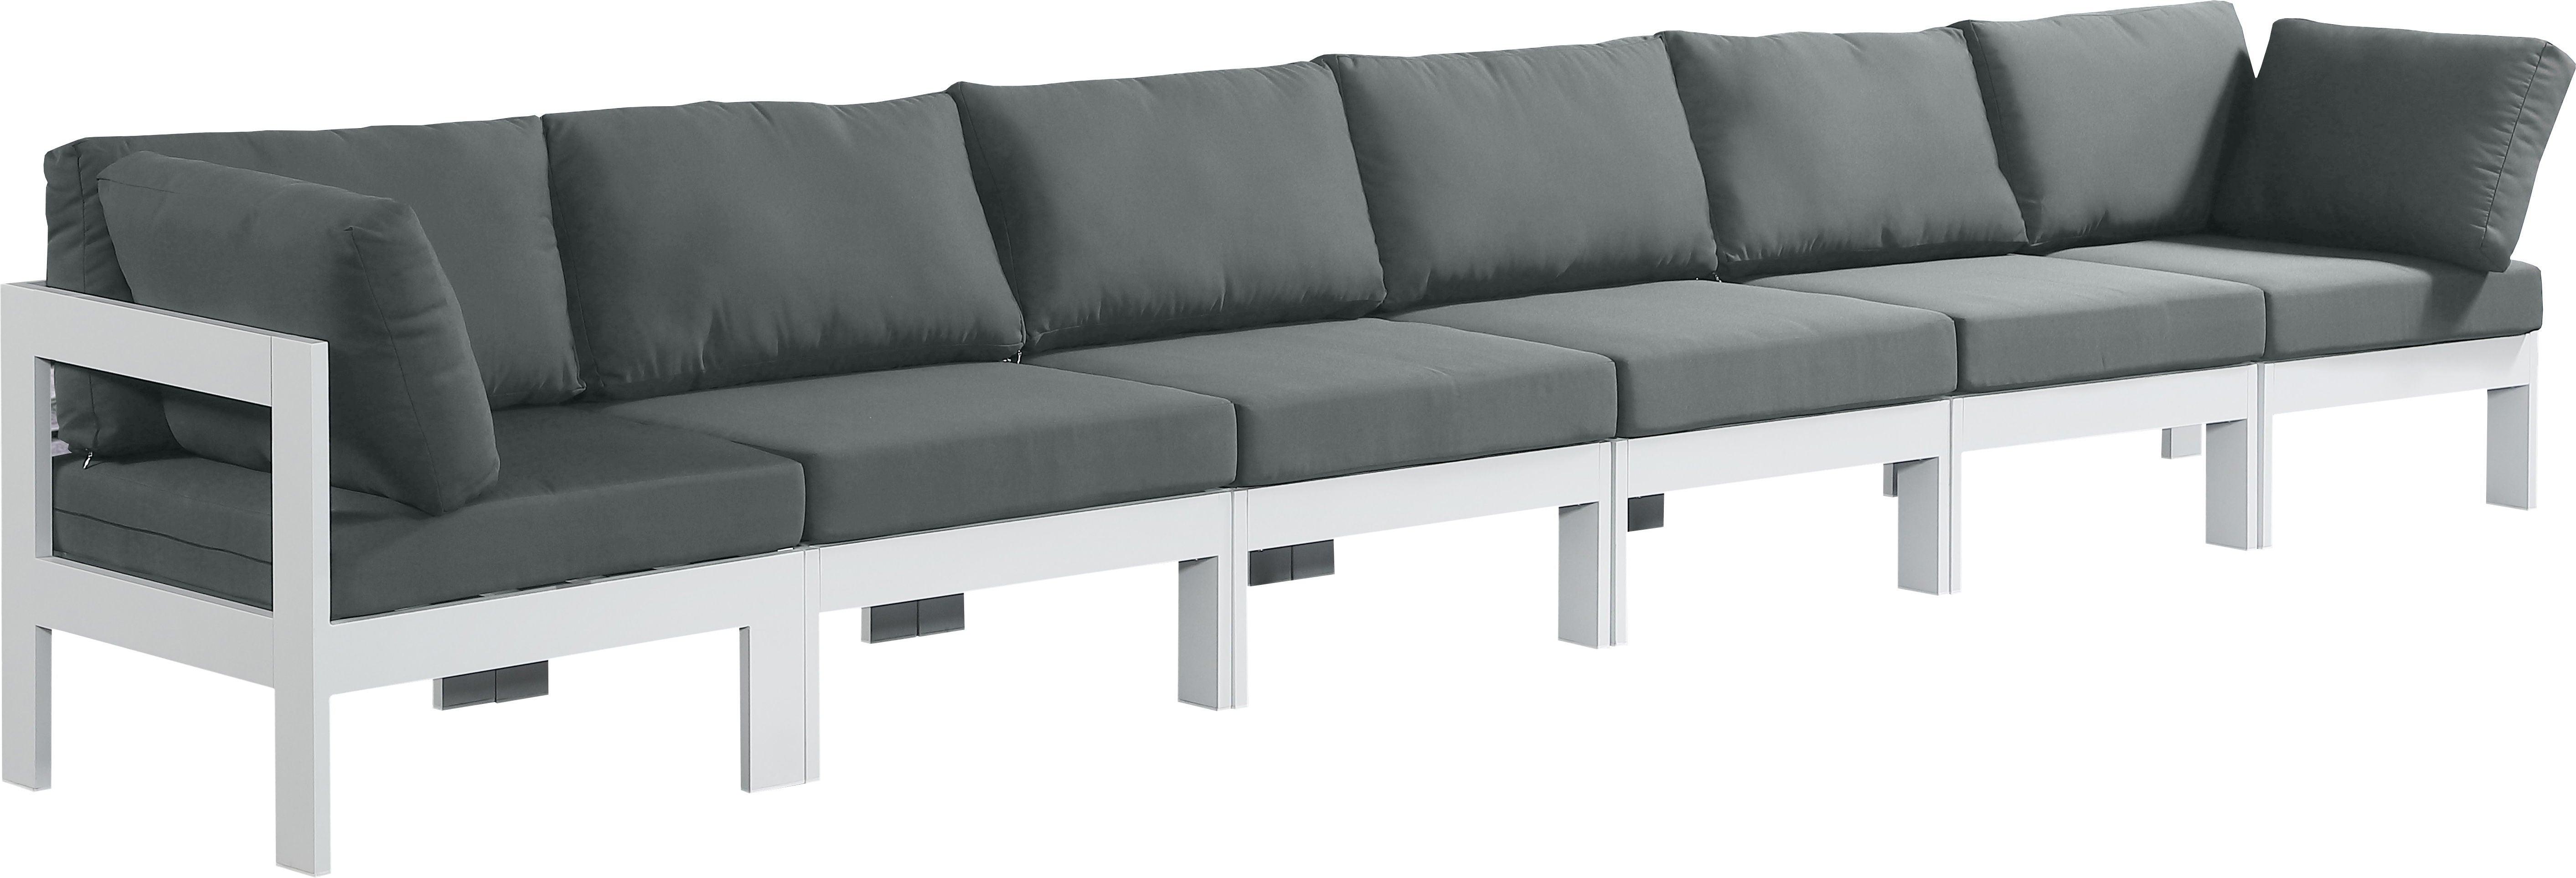 Meridian Furniture - Nizuc - Outdoor Patio Modular Sofa With Frame - Grey - 5th Avenue Furniture